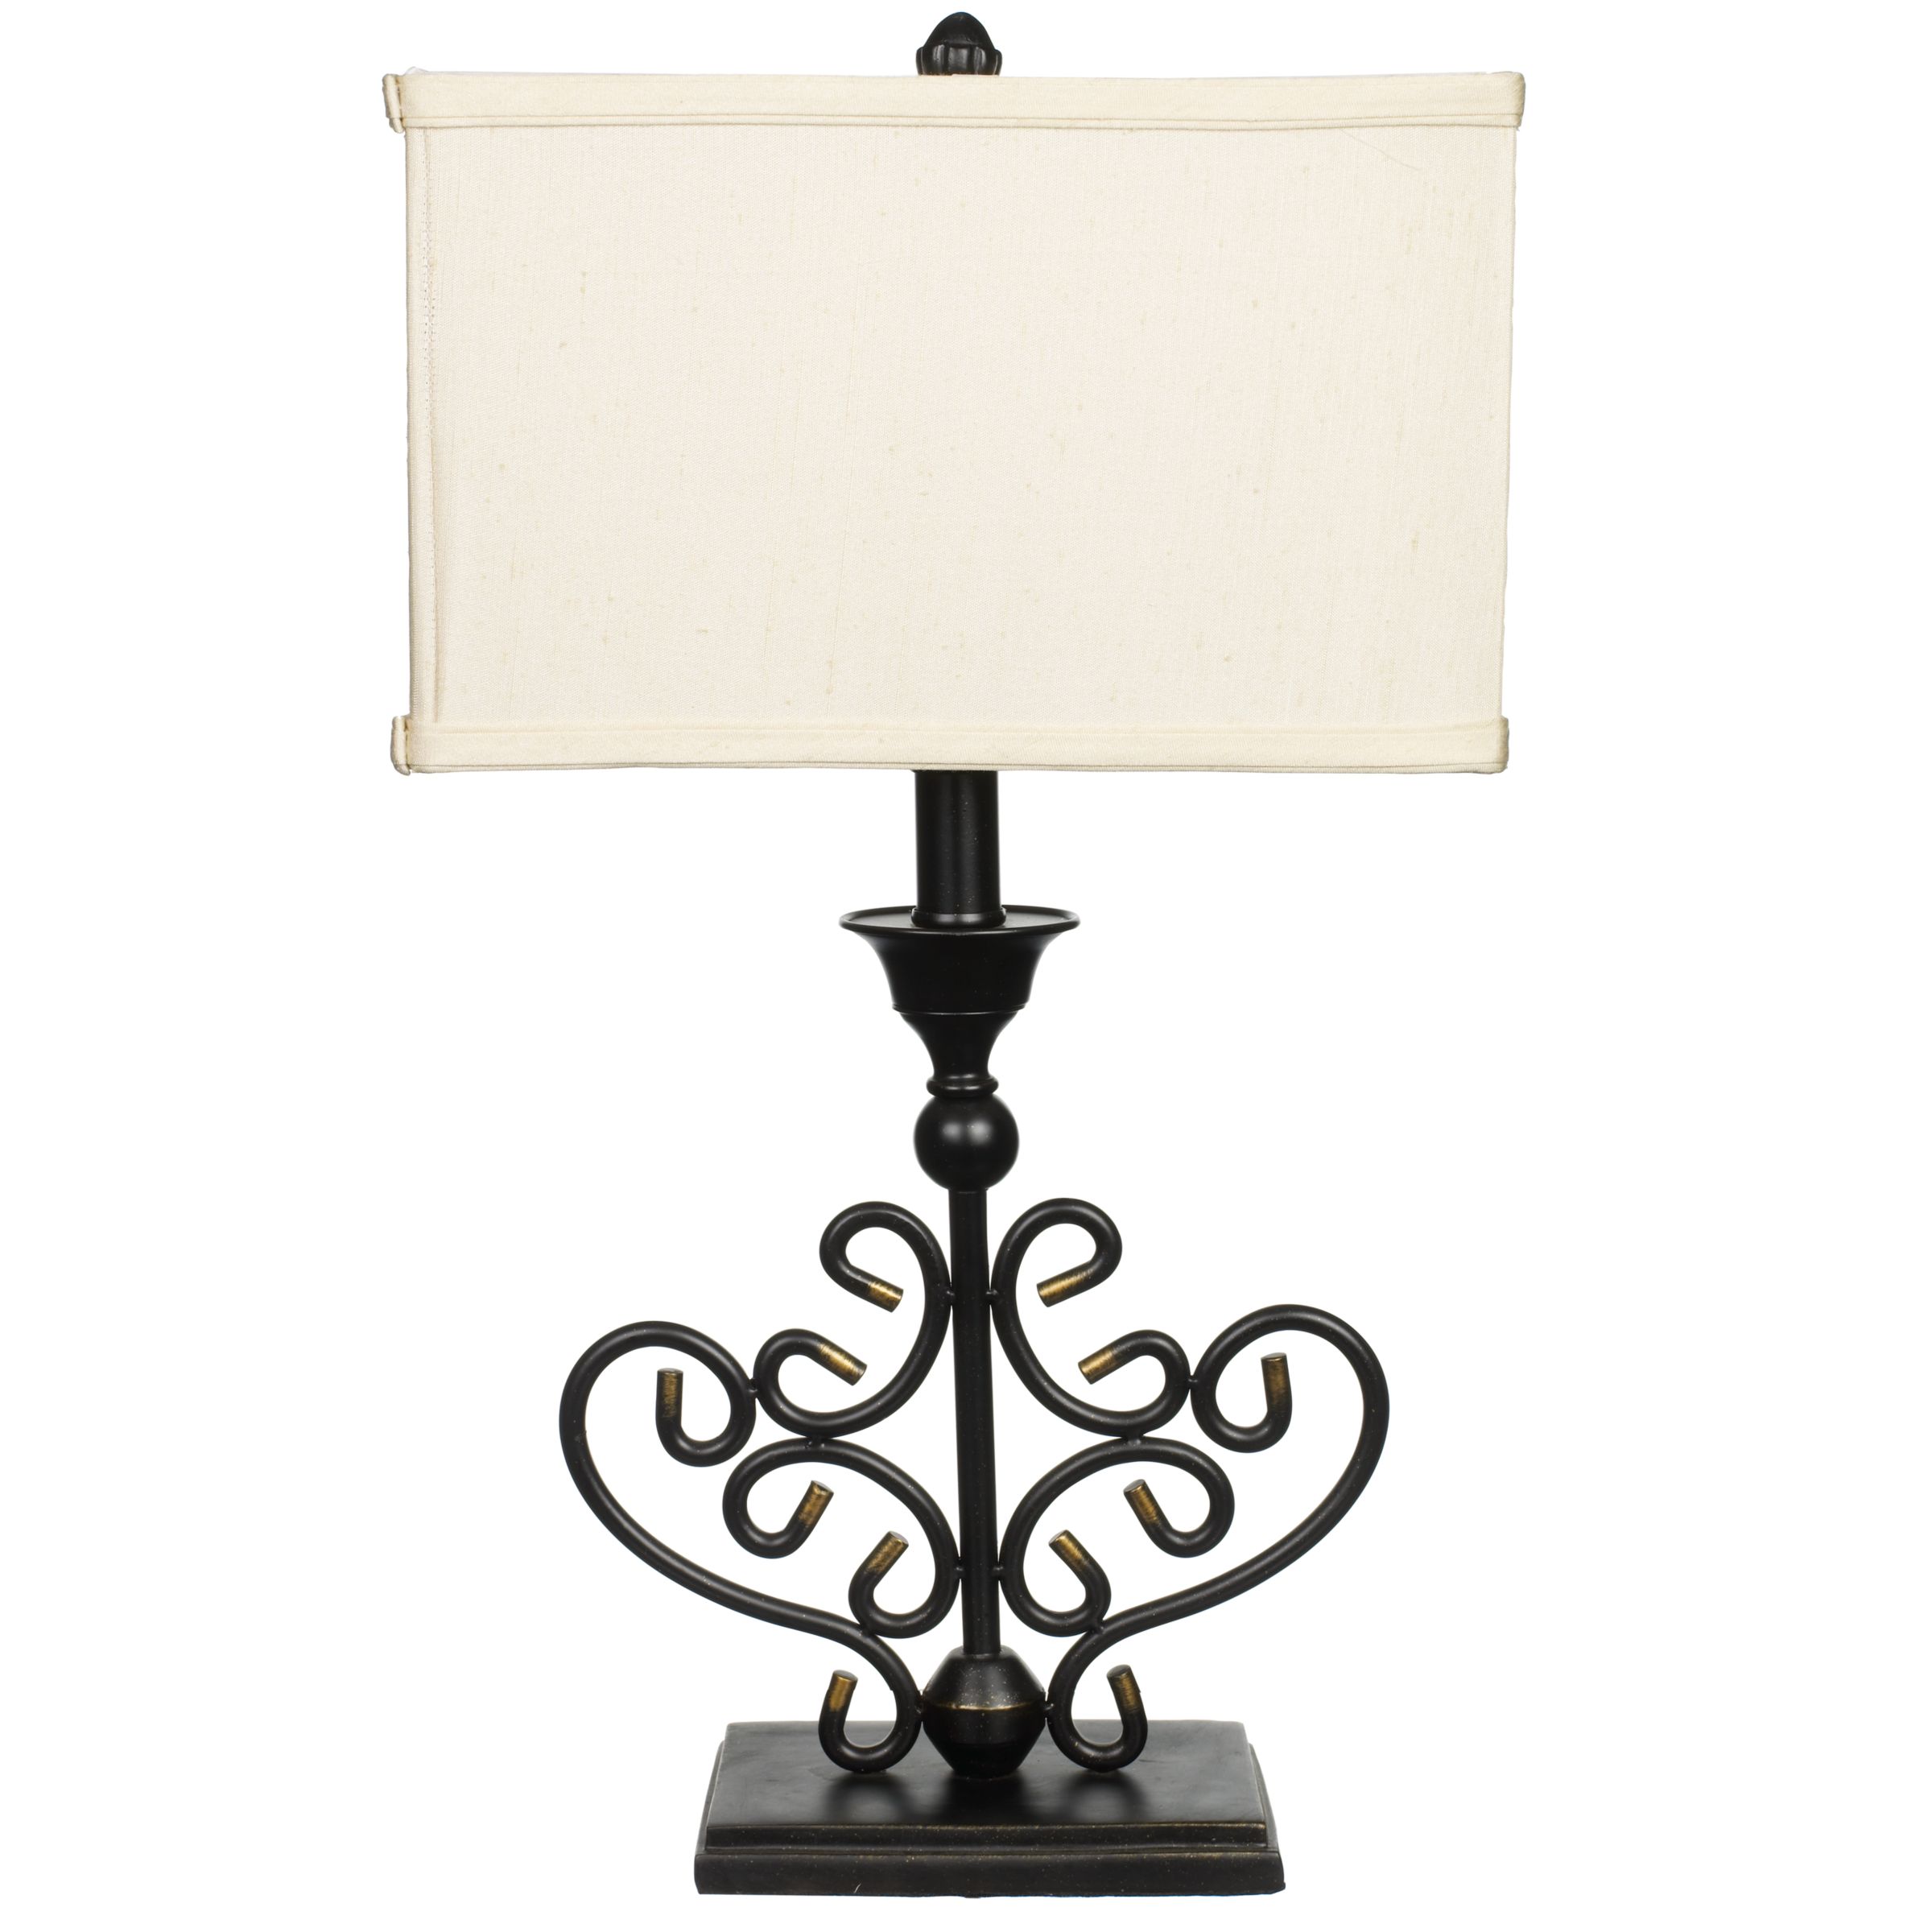 John Lewis Florentia Table Lamp, Dark